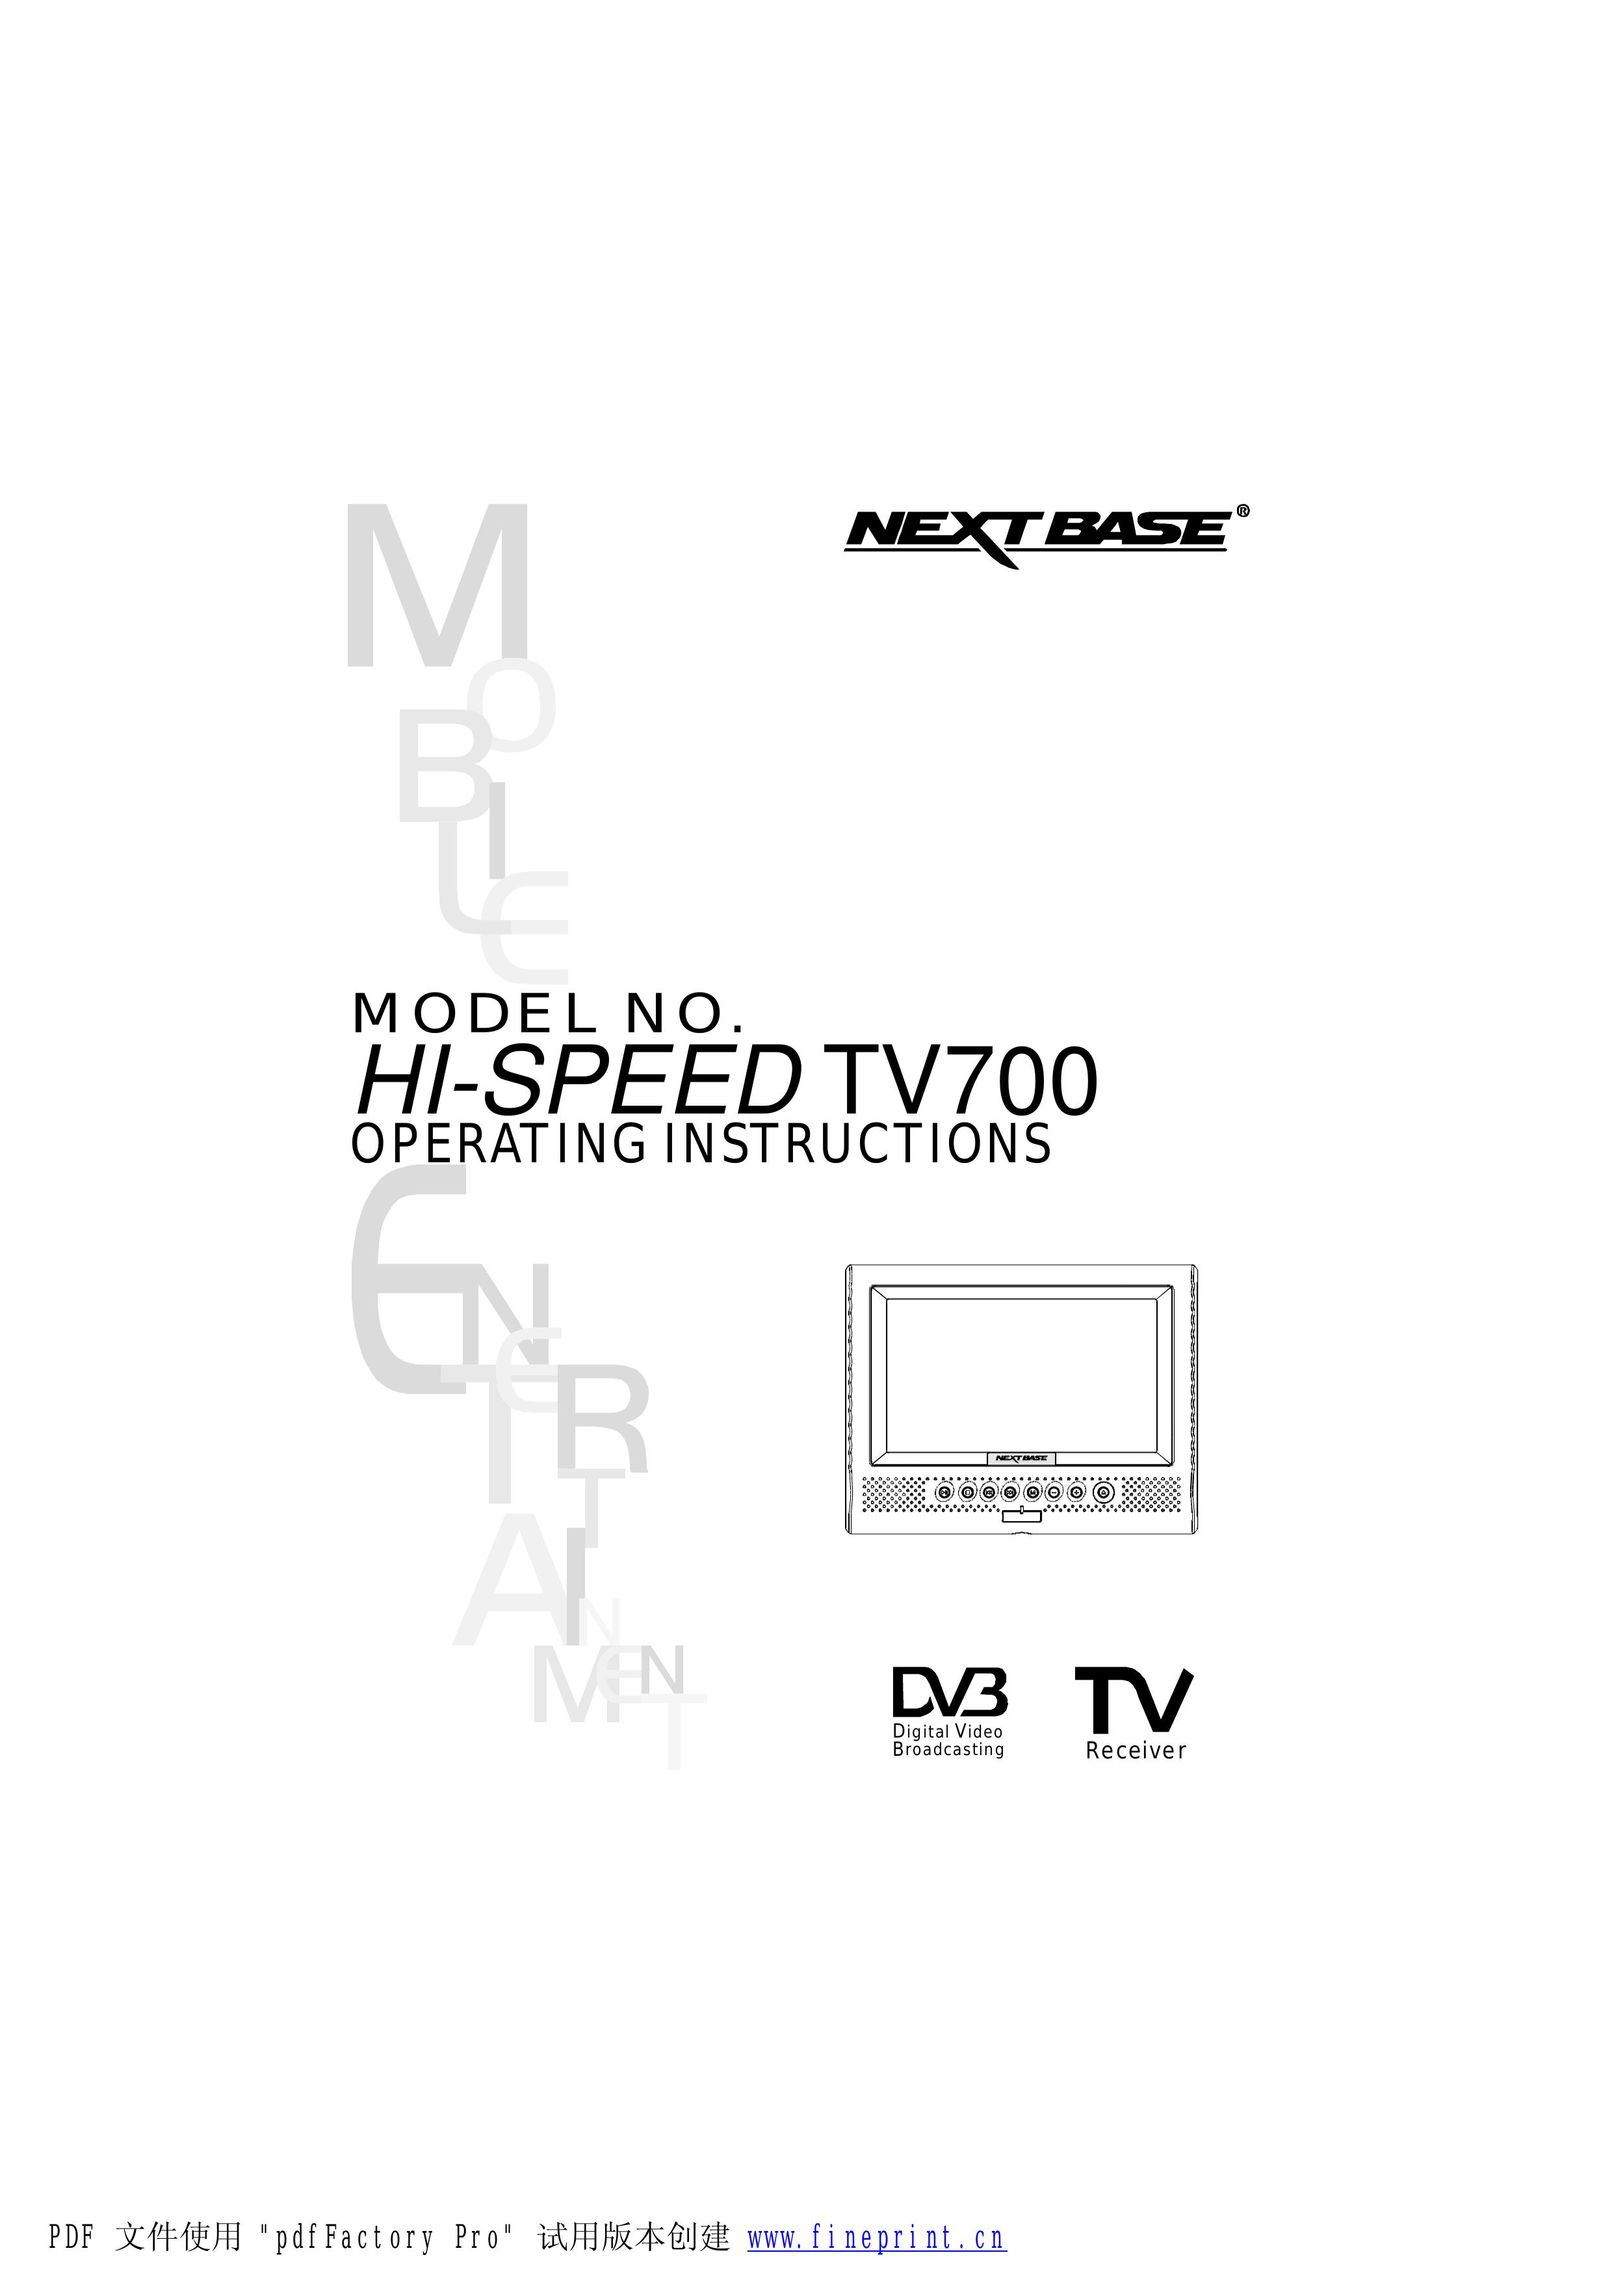 NextBase TV700 CRT Television User Manual